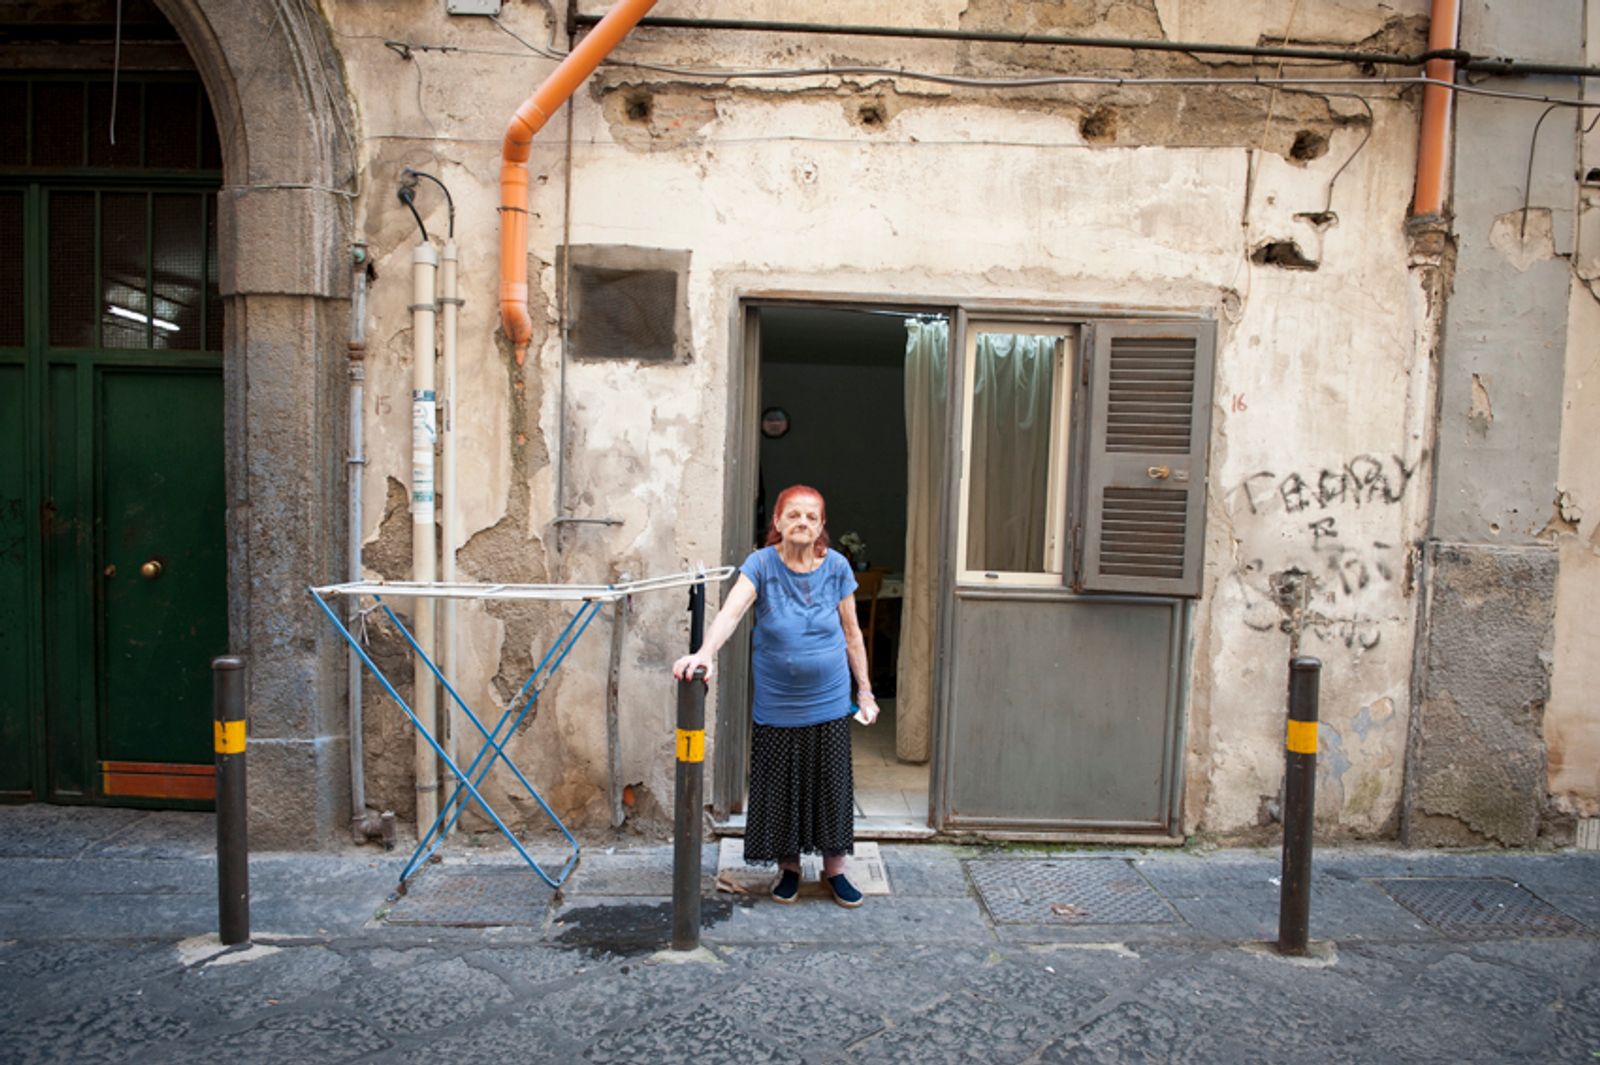 © Emanuela Colombo - Image from the quartieri spagnoli - napoli photography project